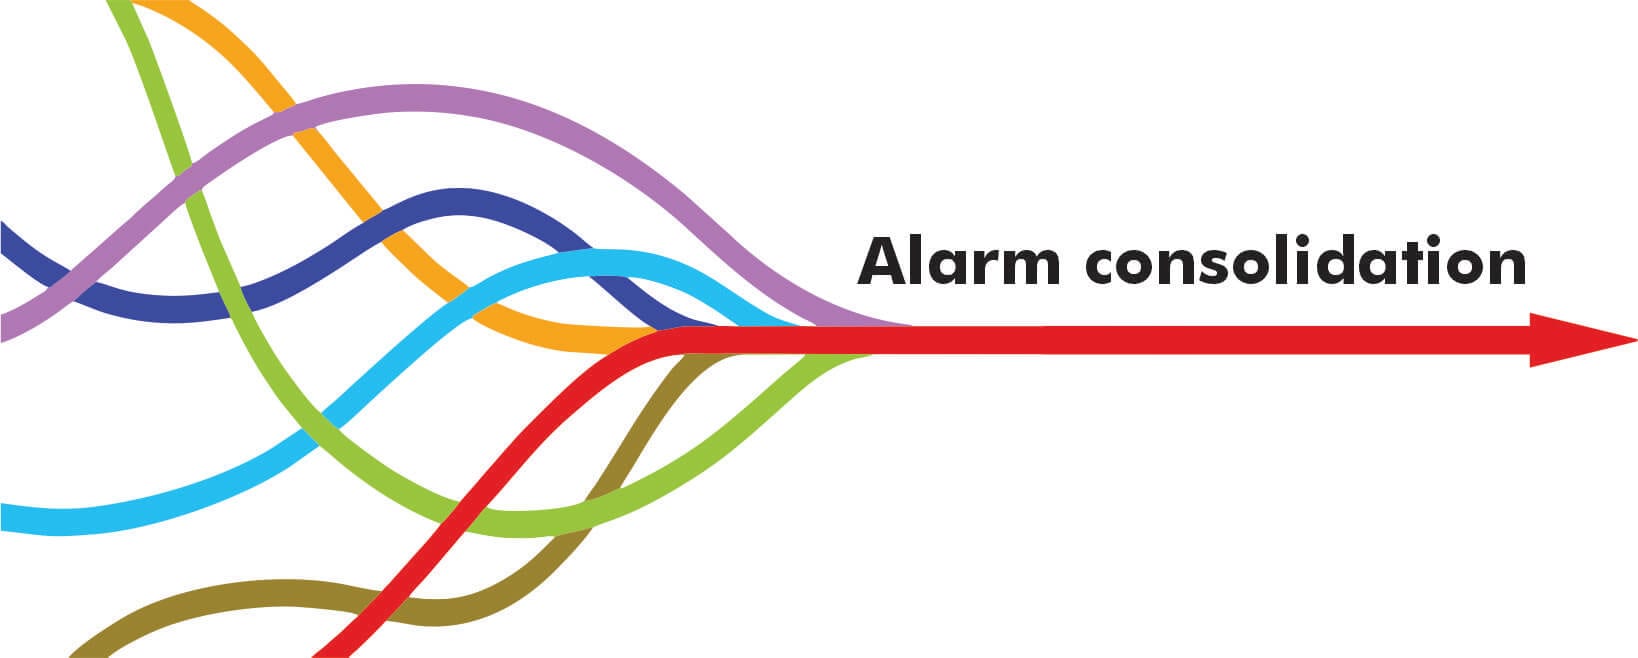 Alarm consolidation 2